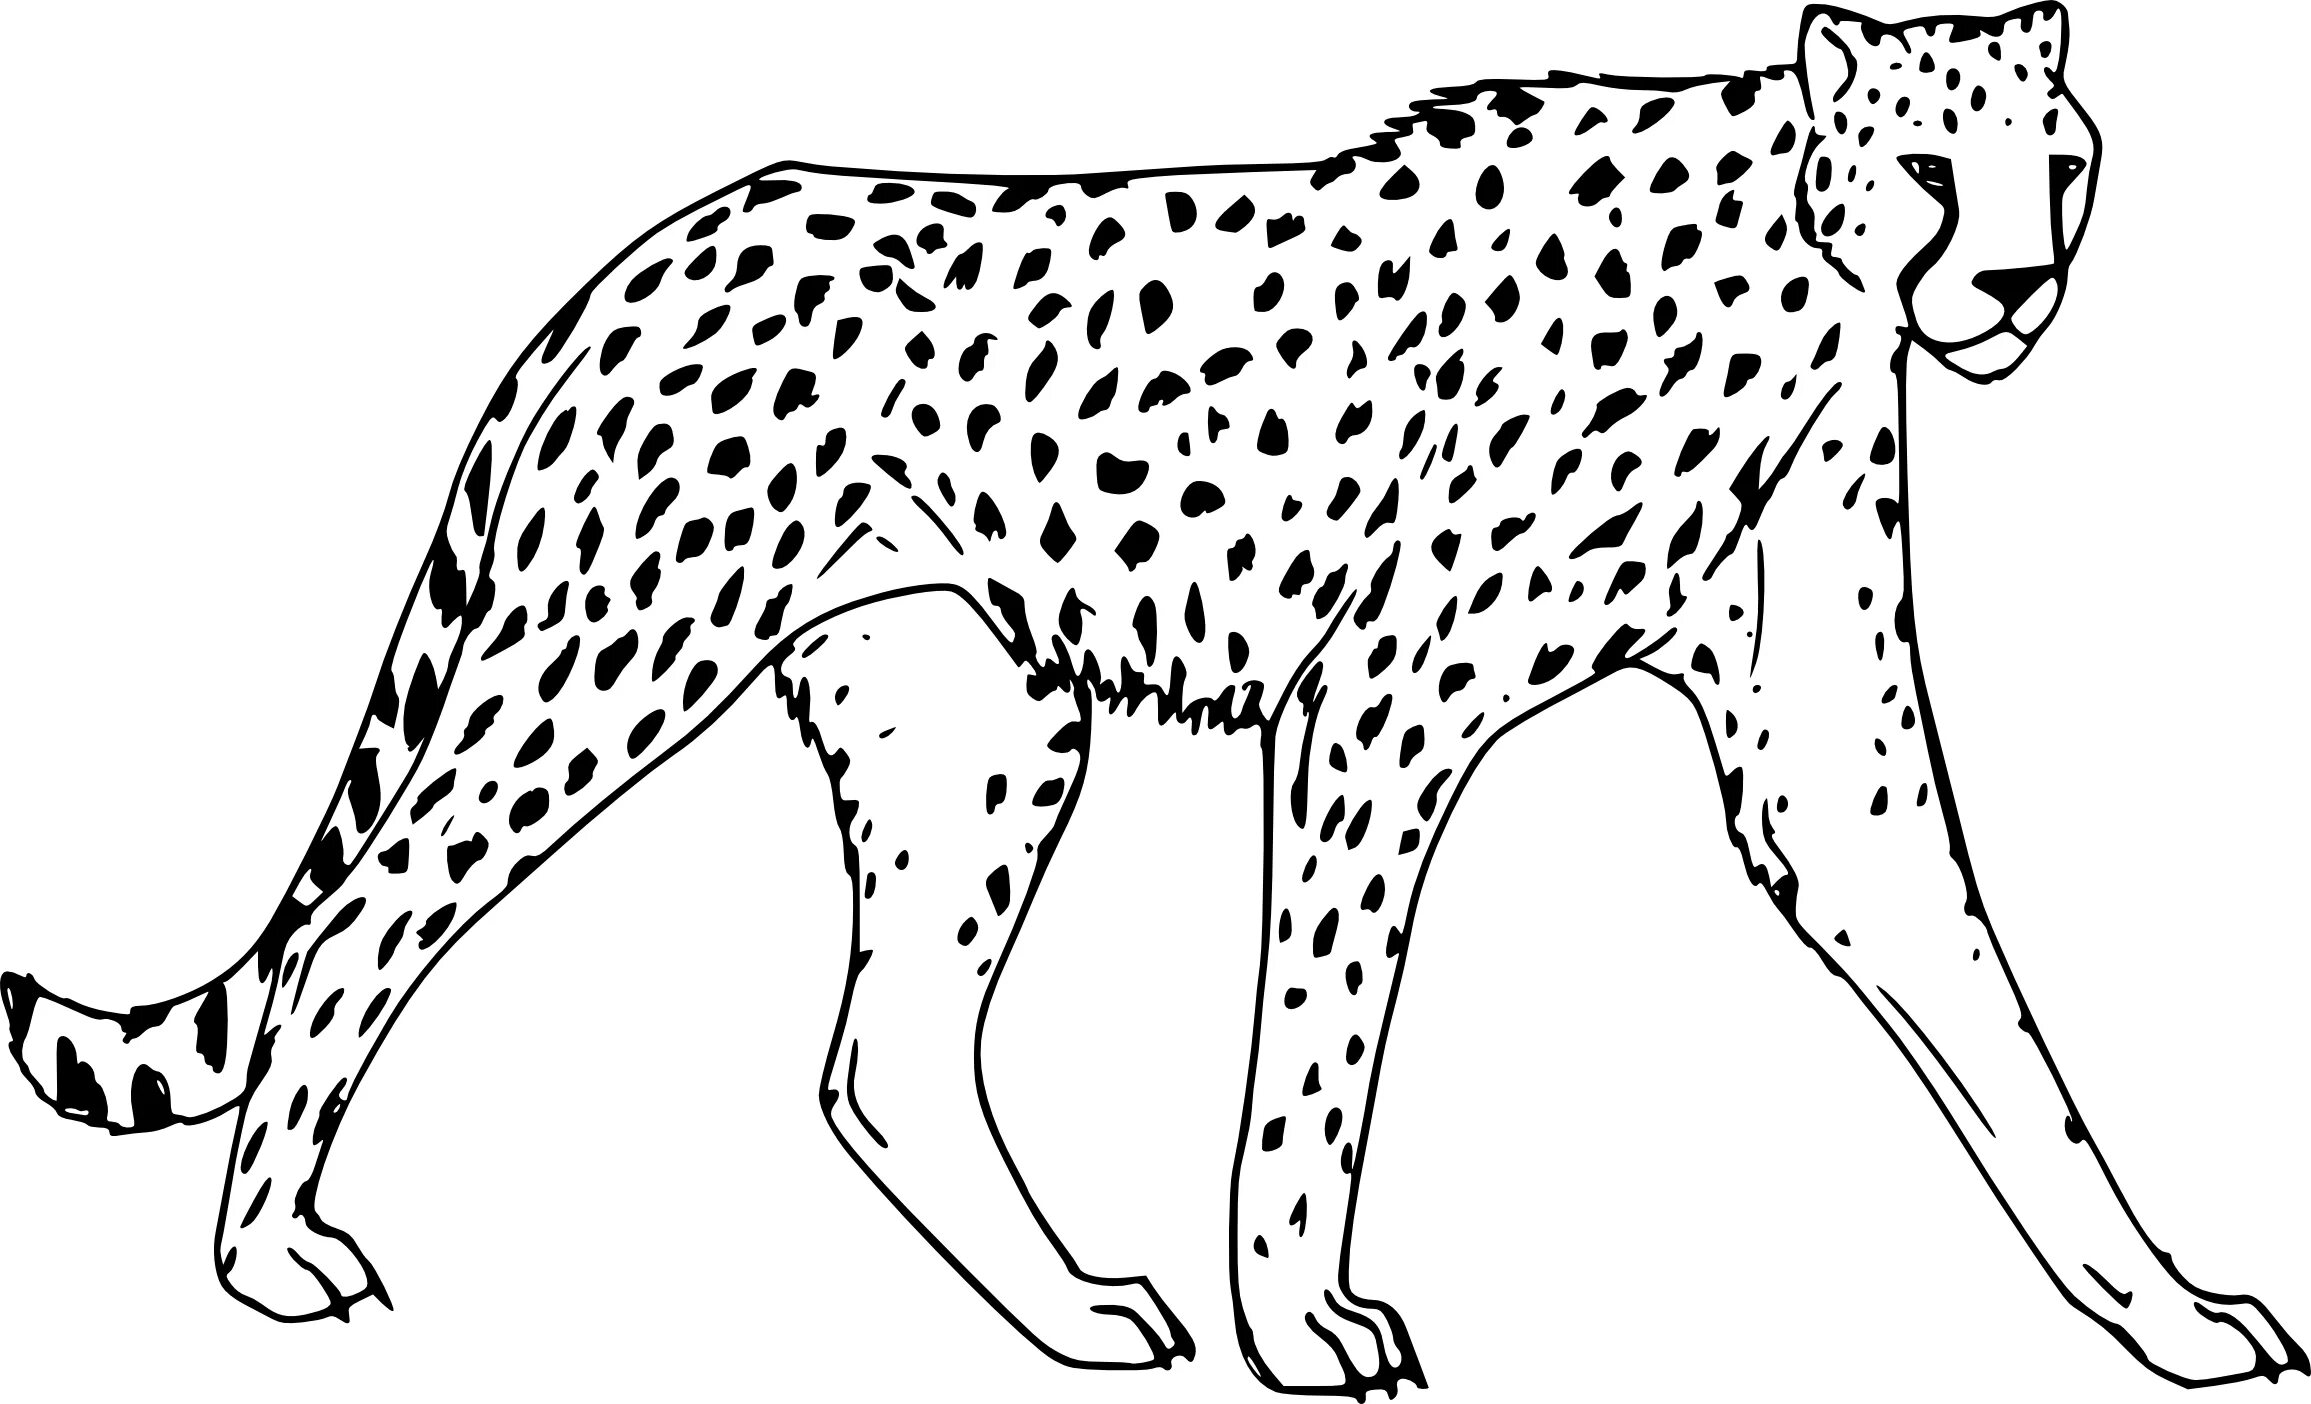 King cheetah #14